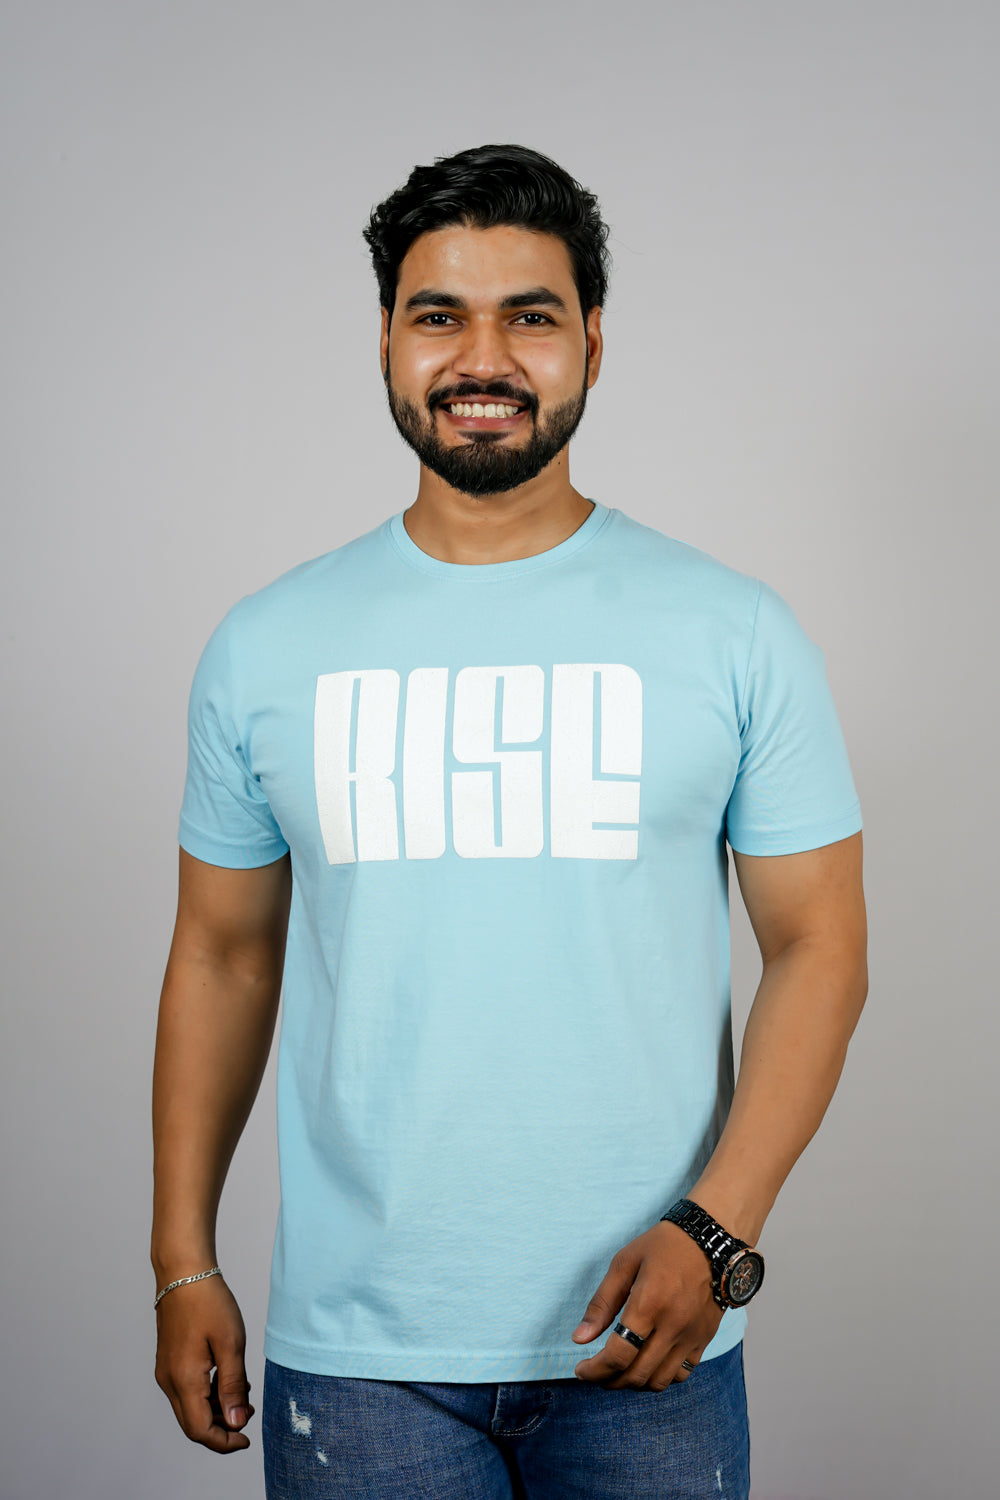 Rarebond's Rise Sky Half Sleeve Comfort Fit T-shirt